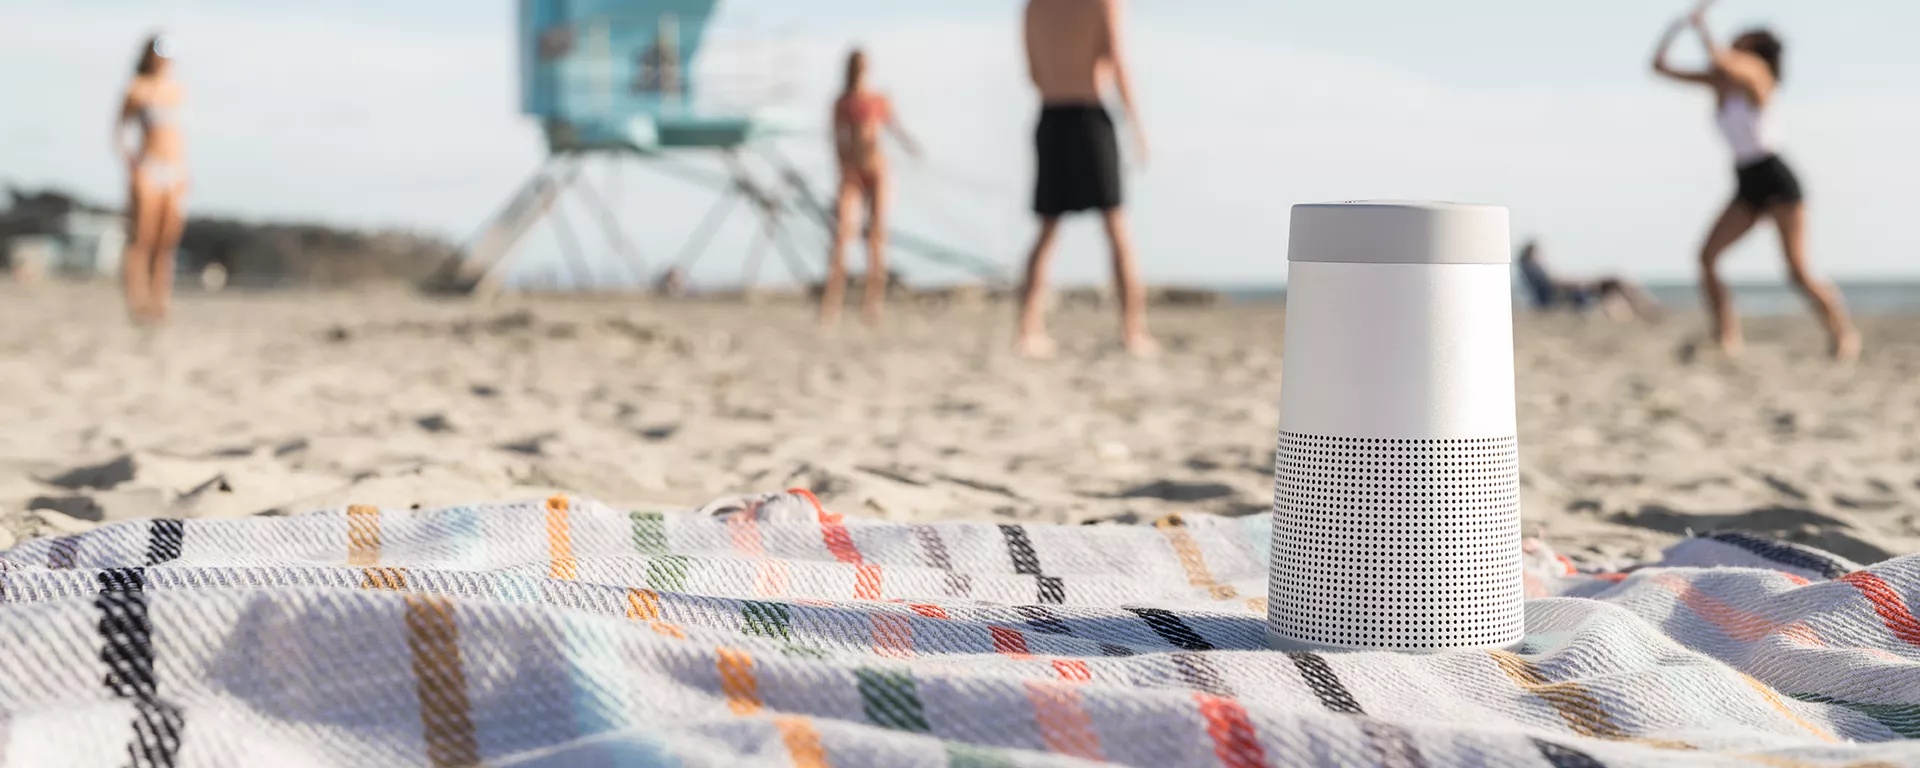 Bose SoundLink Revolve II Bluetooth Speaker on a blanket at the beach